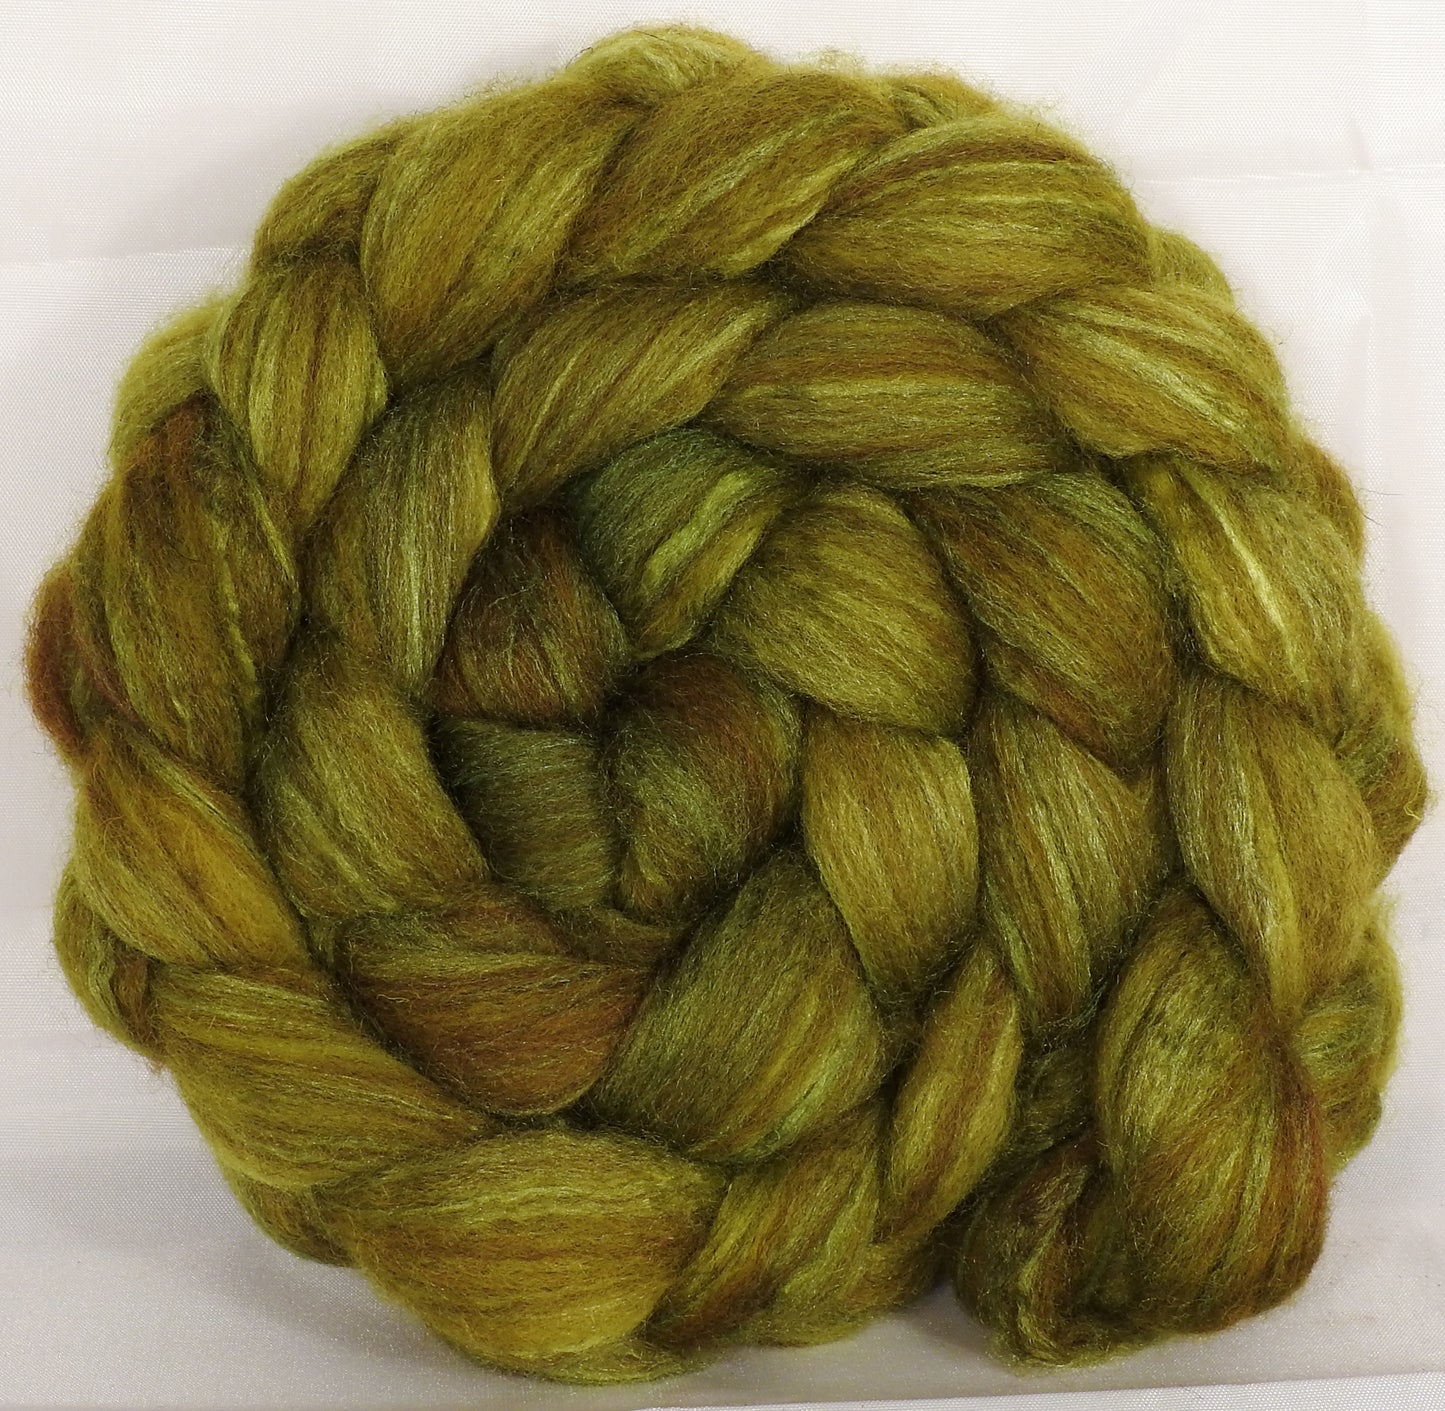 Mixed UK Bfl/ Tussah Silk  (75/25) - Asparagus - 5.4 oz. - Inglenook Fibers